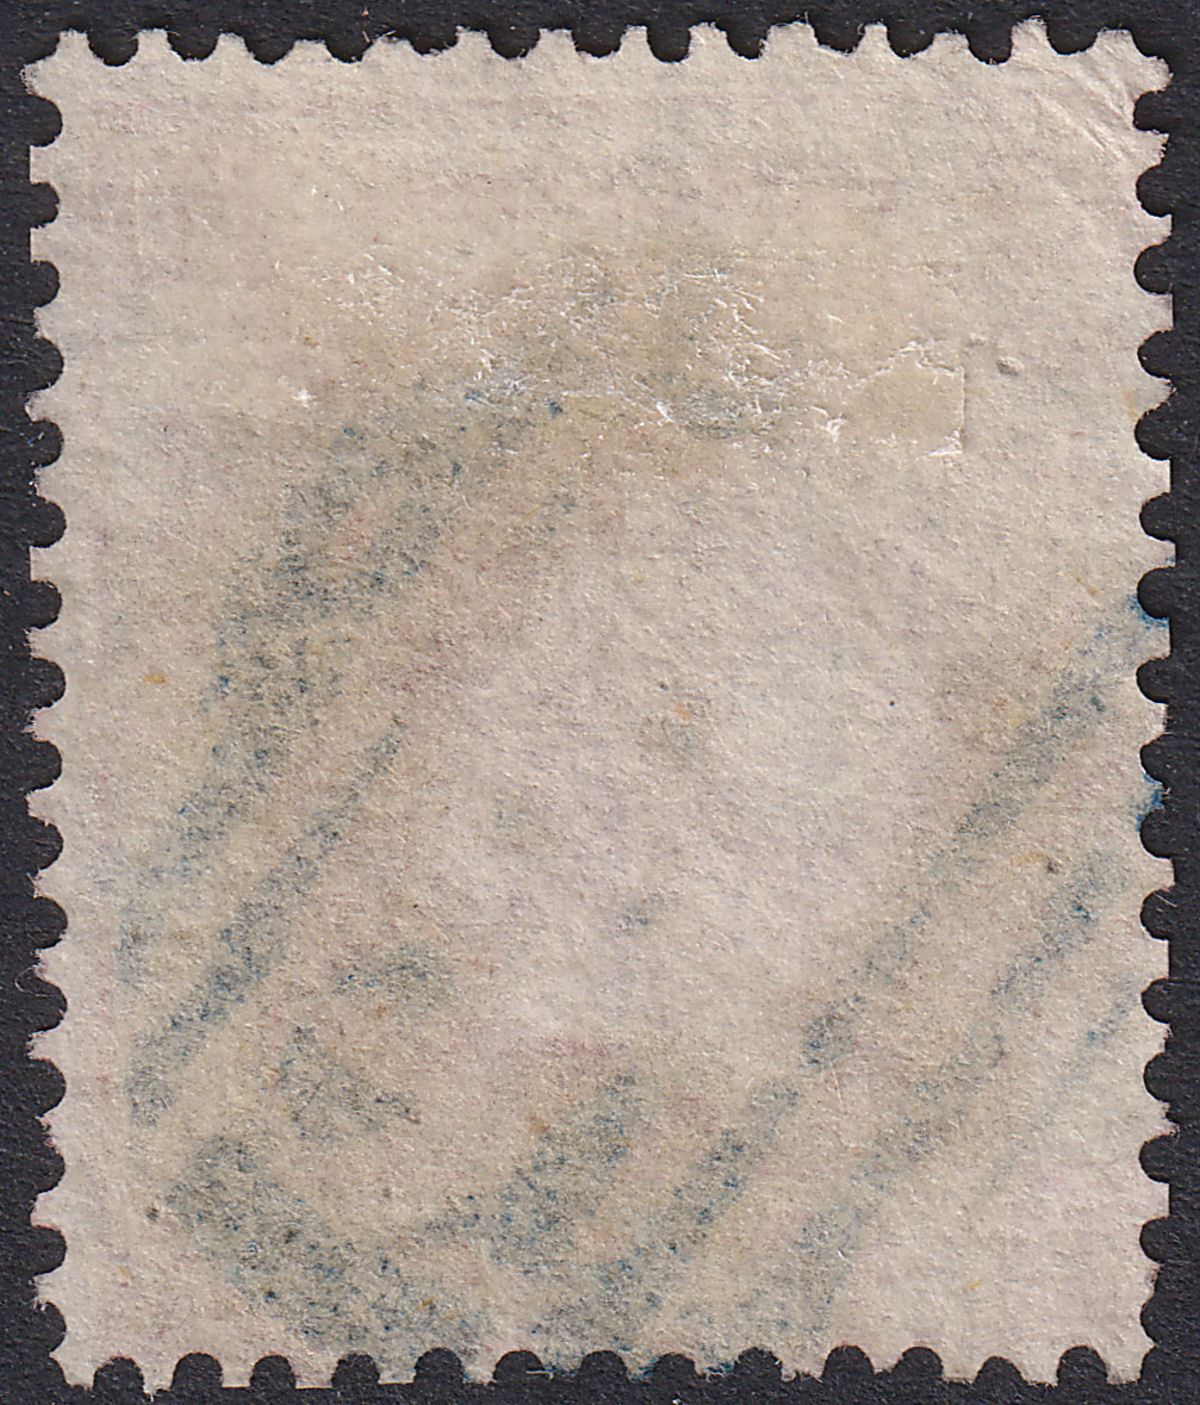 Hong Kong 1862 QV 48c Rose Used SG6 cat £350 with deep blue B62 postmark